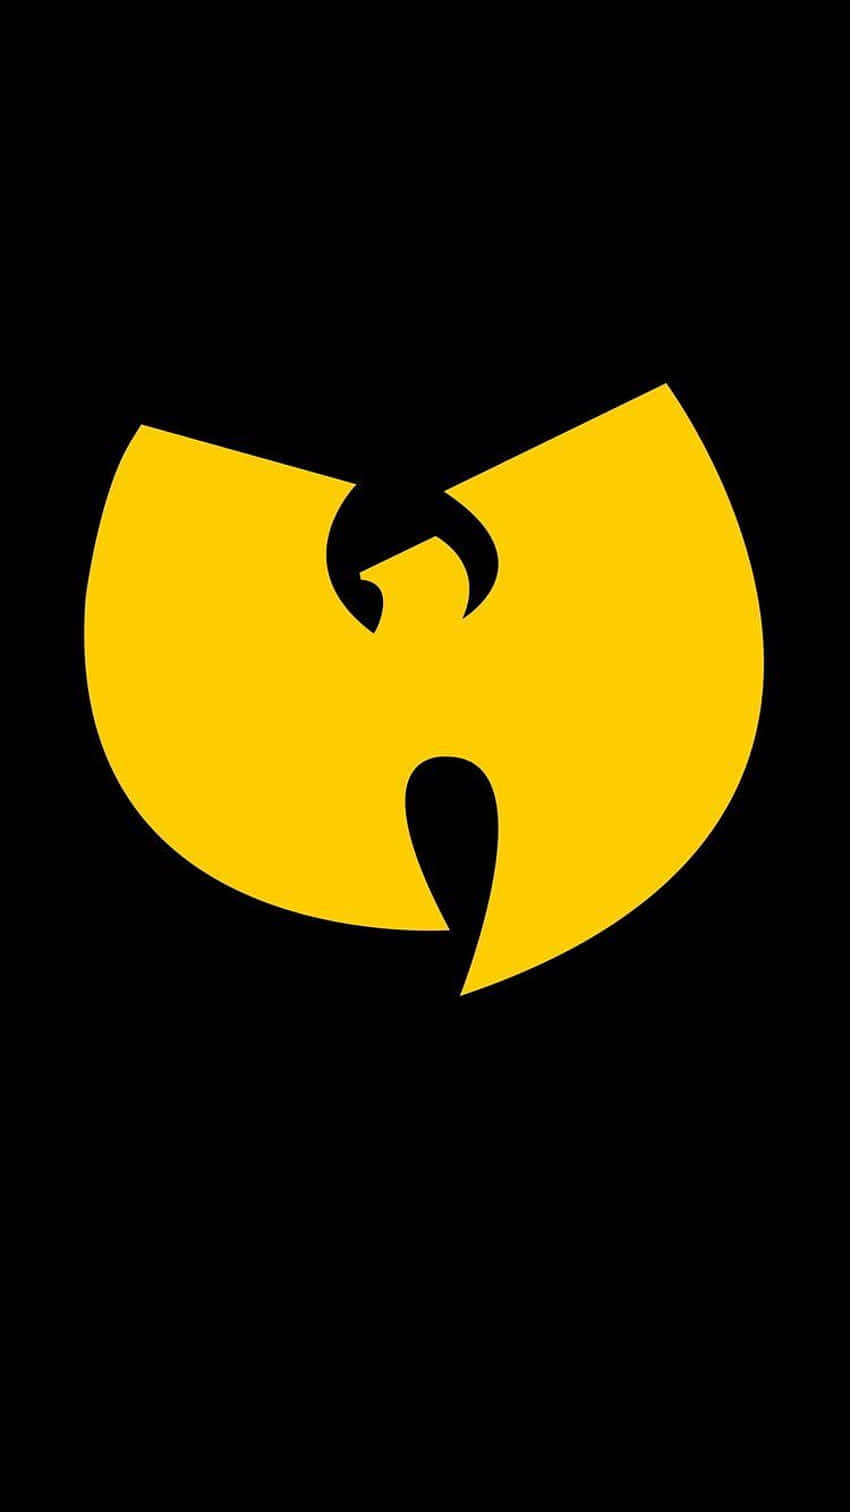 Wu-Tang Clan Logo Tapet: Se det legendariske Wu-Tang Clan-logo med det brølende pandehoved. Wallpaper